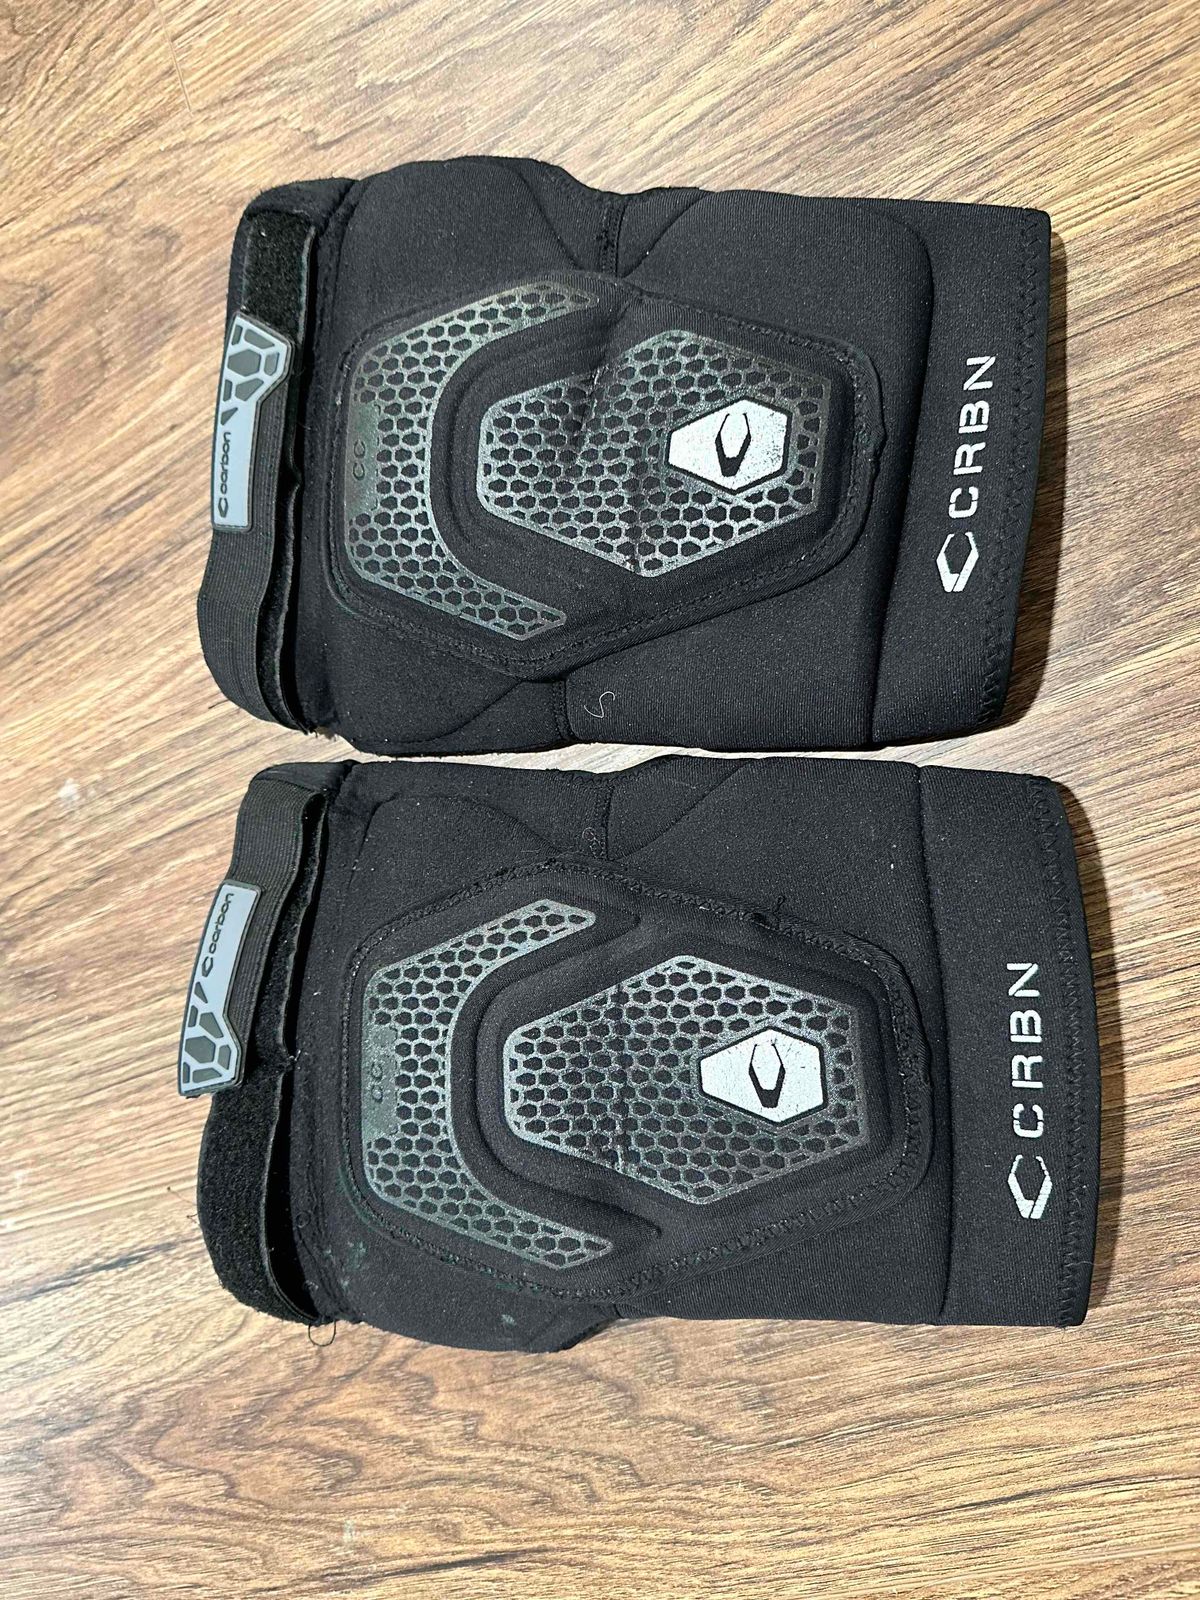 Carbon XL Knee pads